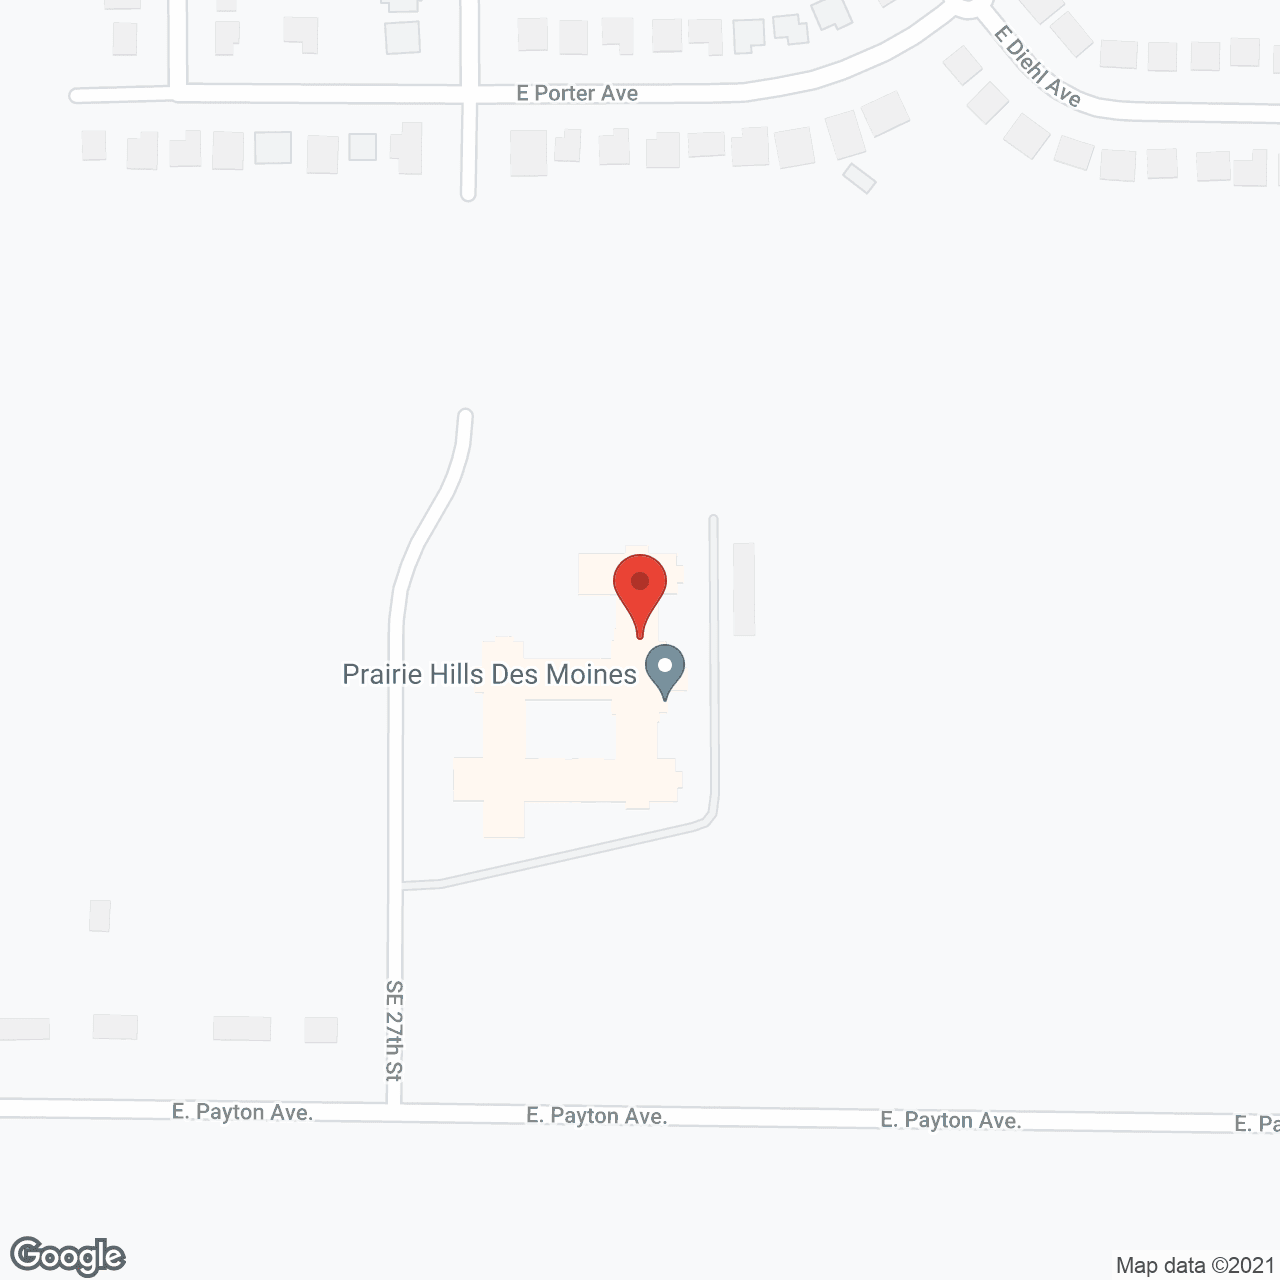 Addington Place of Des Moines in google map